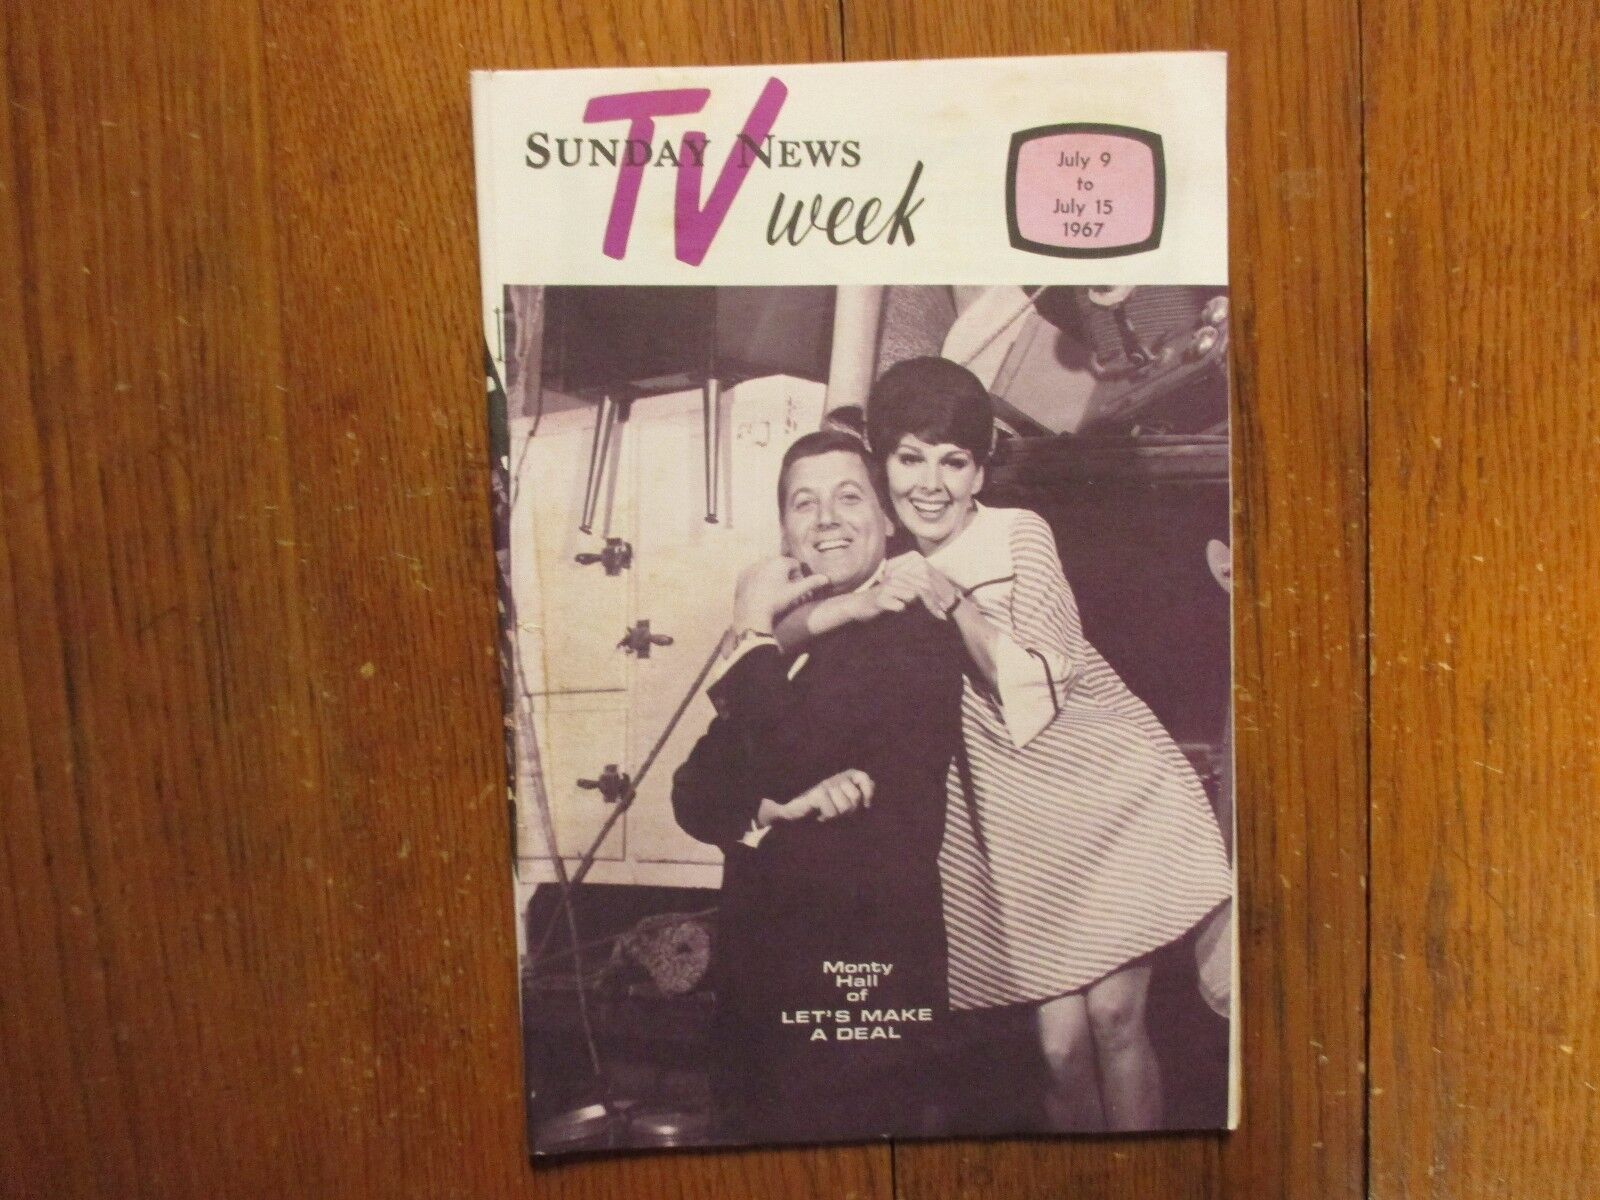 July 9-1967 Lancaster Pa TV Week Maga(MONTY HALL/CAROL MERRILL/LET'S MAKE A DEAL